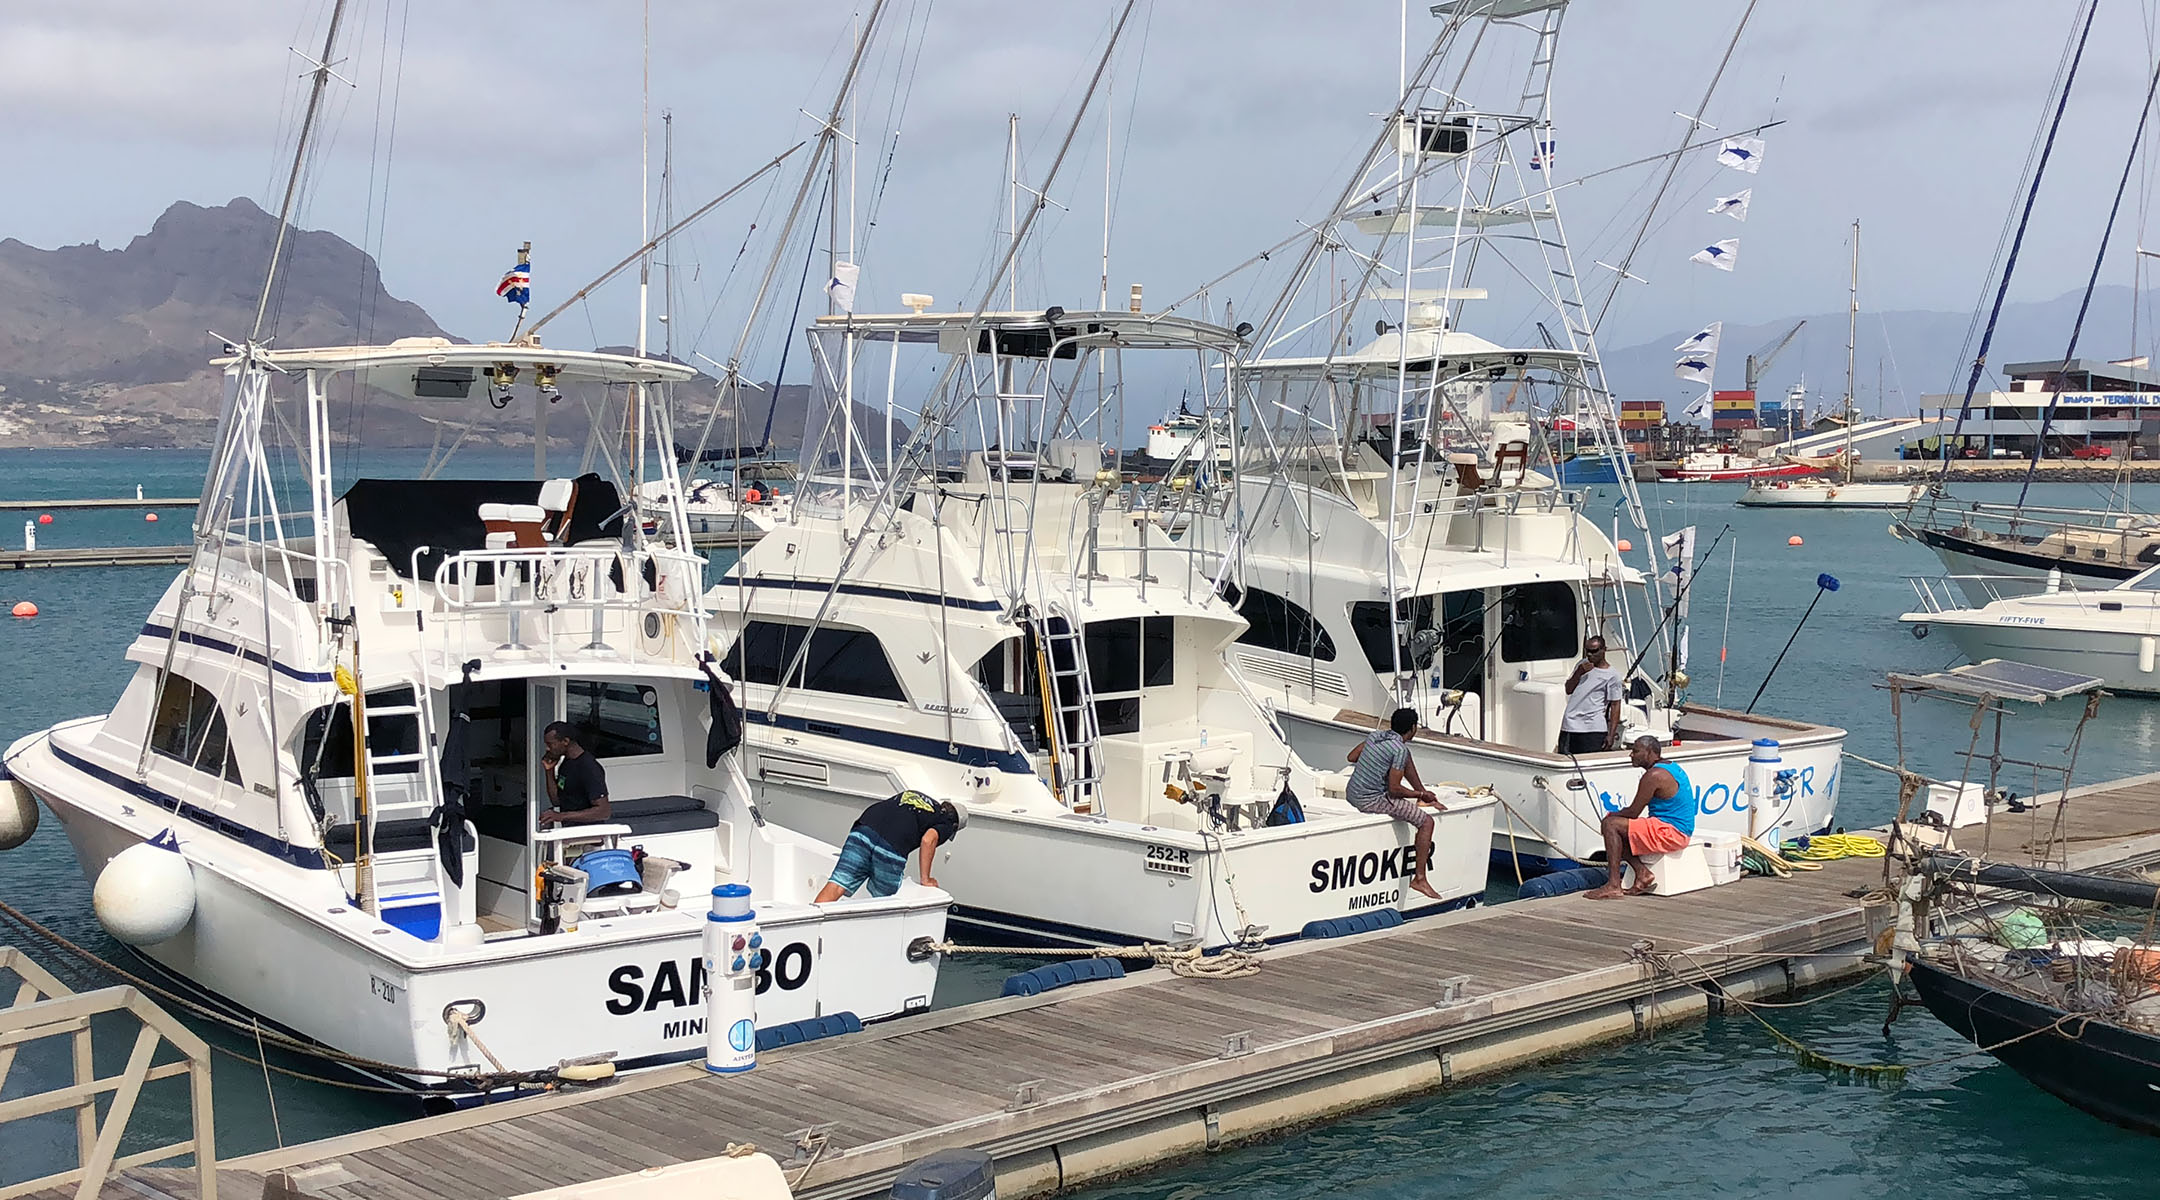 SAMBO / SMOKER / The HOOKER - Fishing Boats - Cape Verde